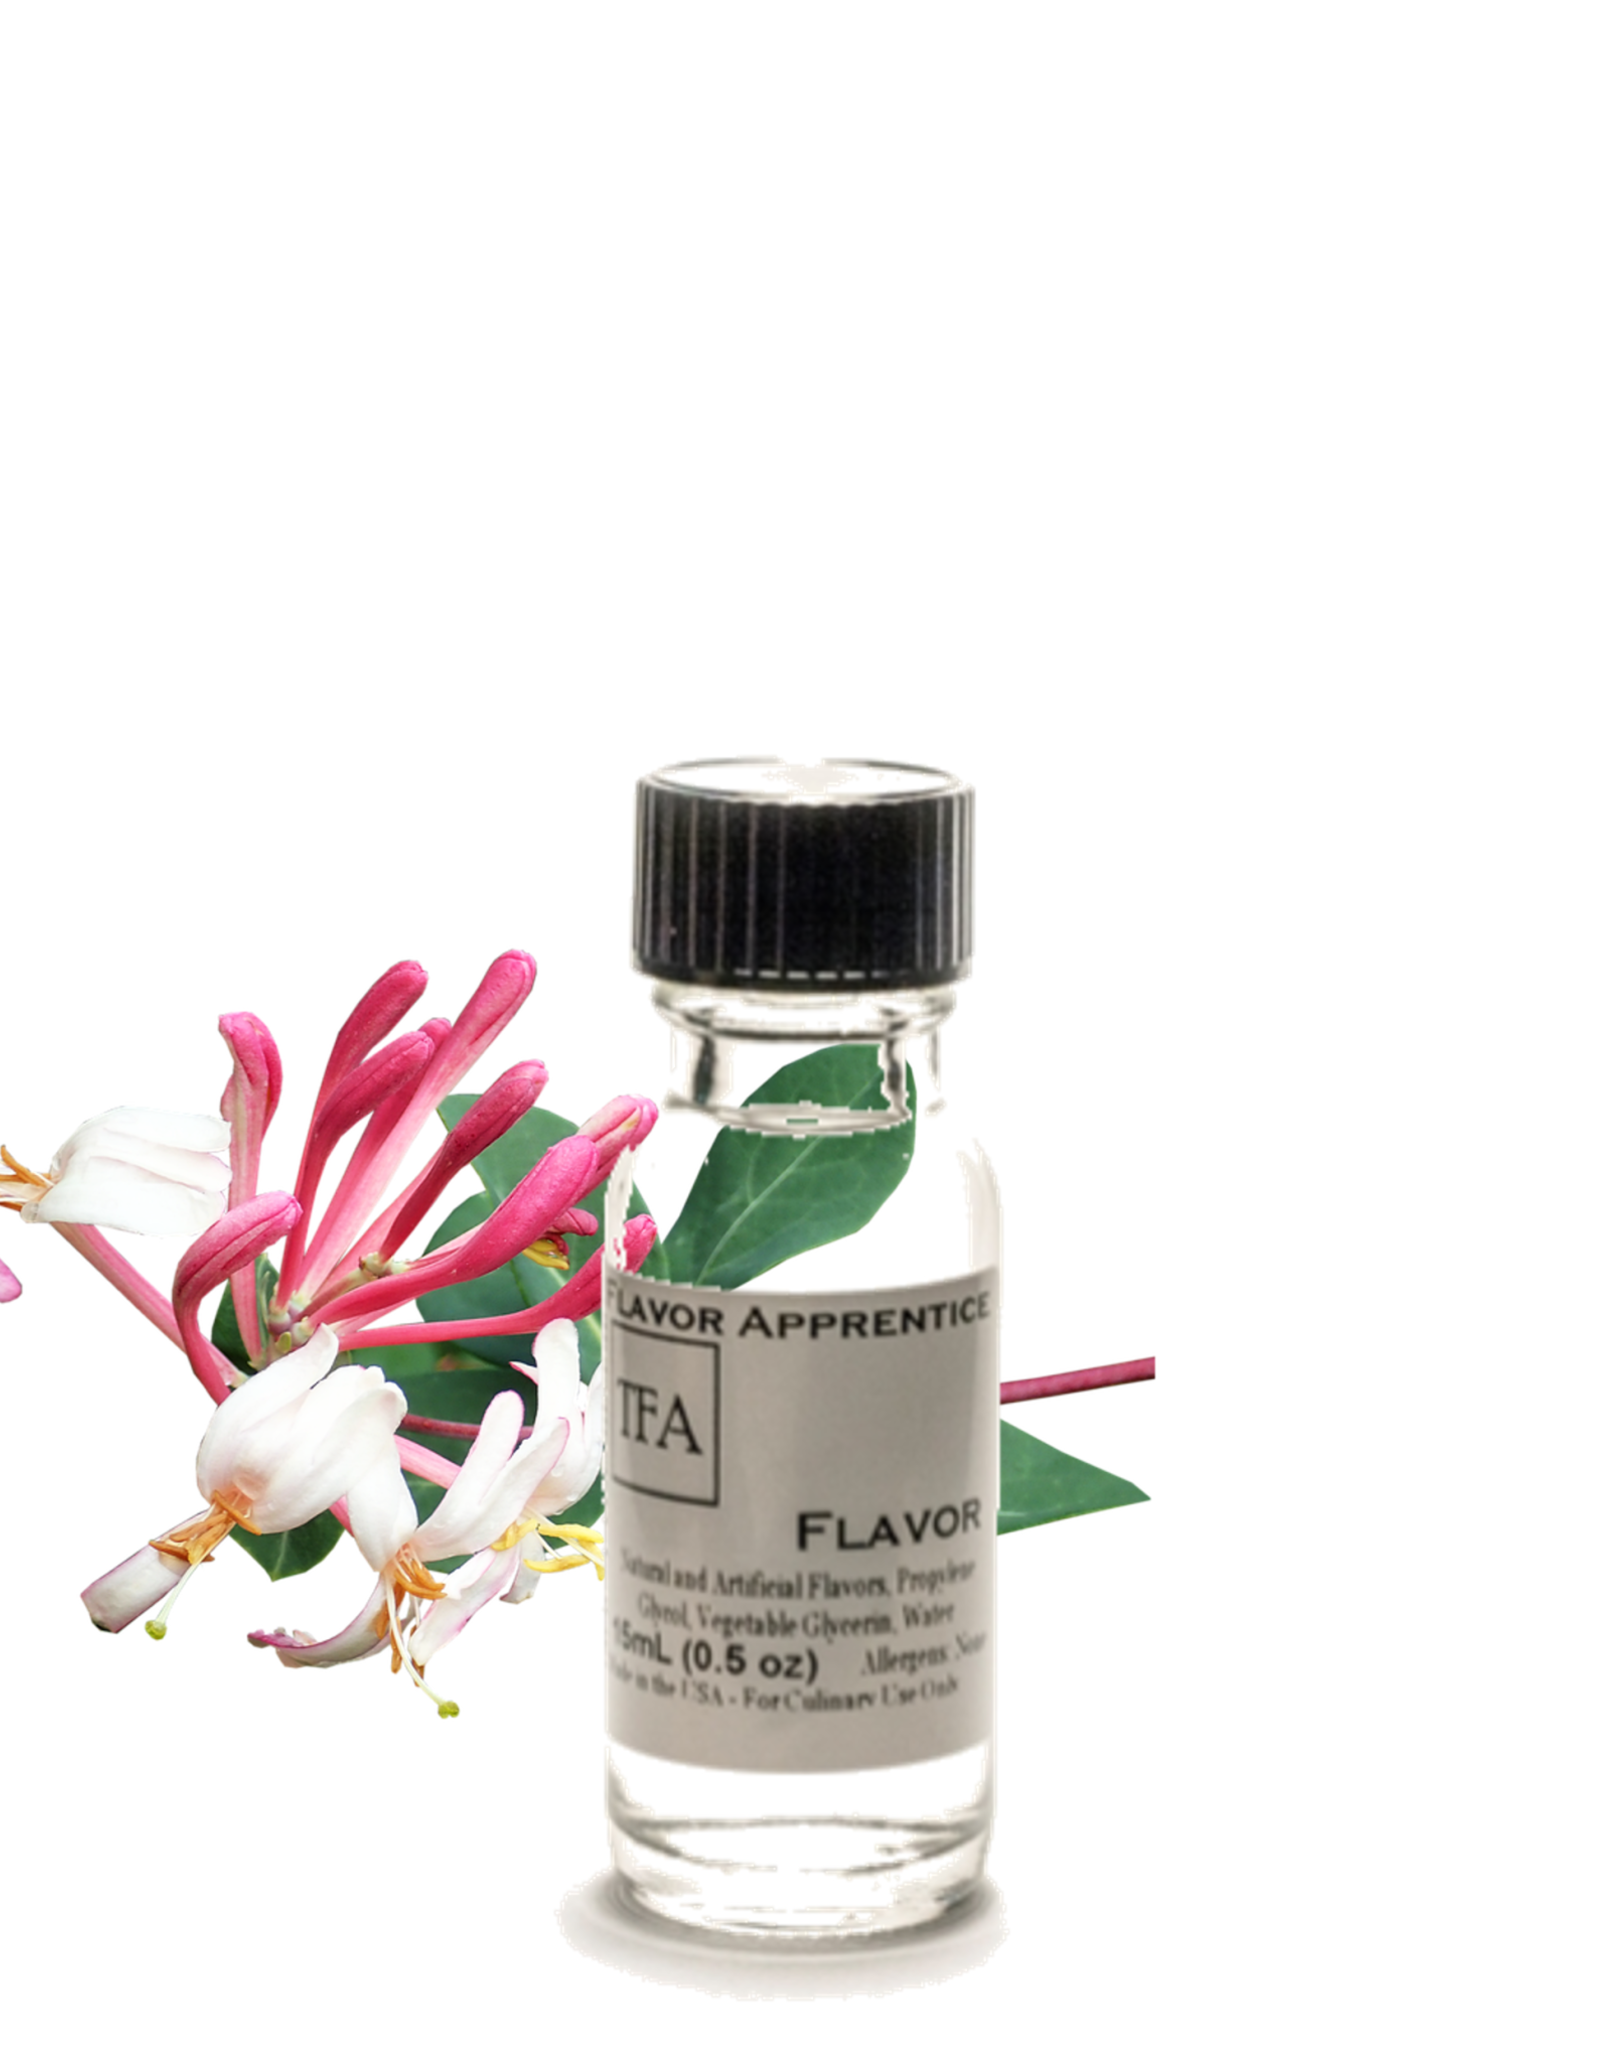 The Flavor Apprentice TFA TFA - Honeysuckle 15ml Aroma